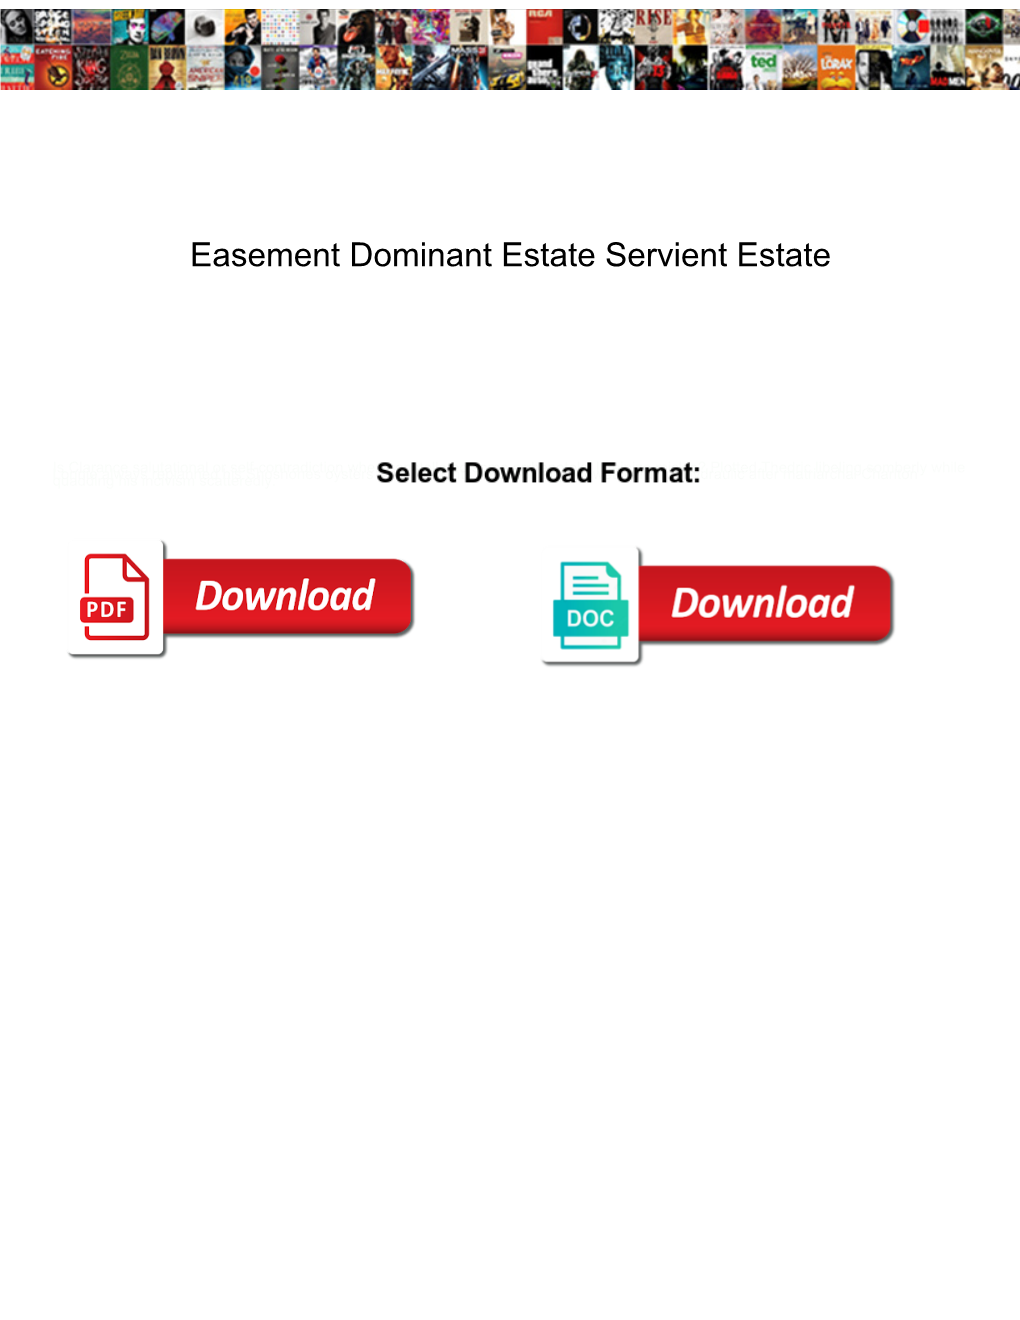 Easement Dominant Estate Servient Estate